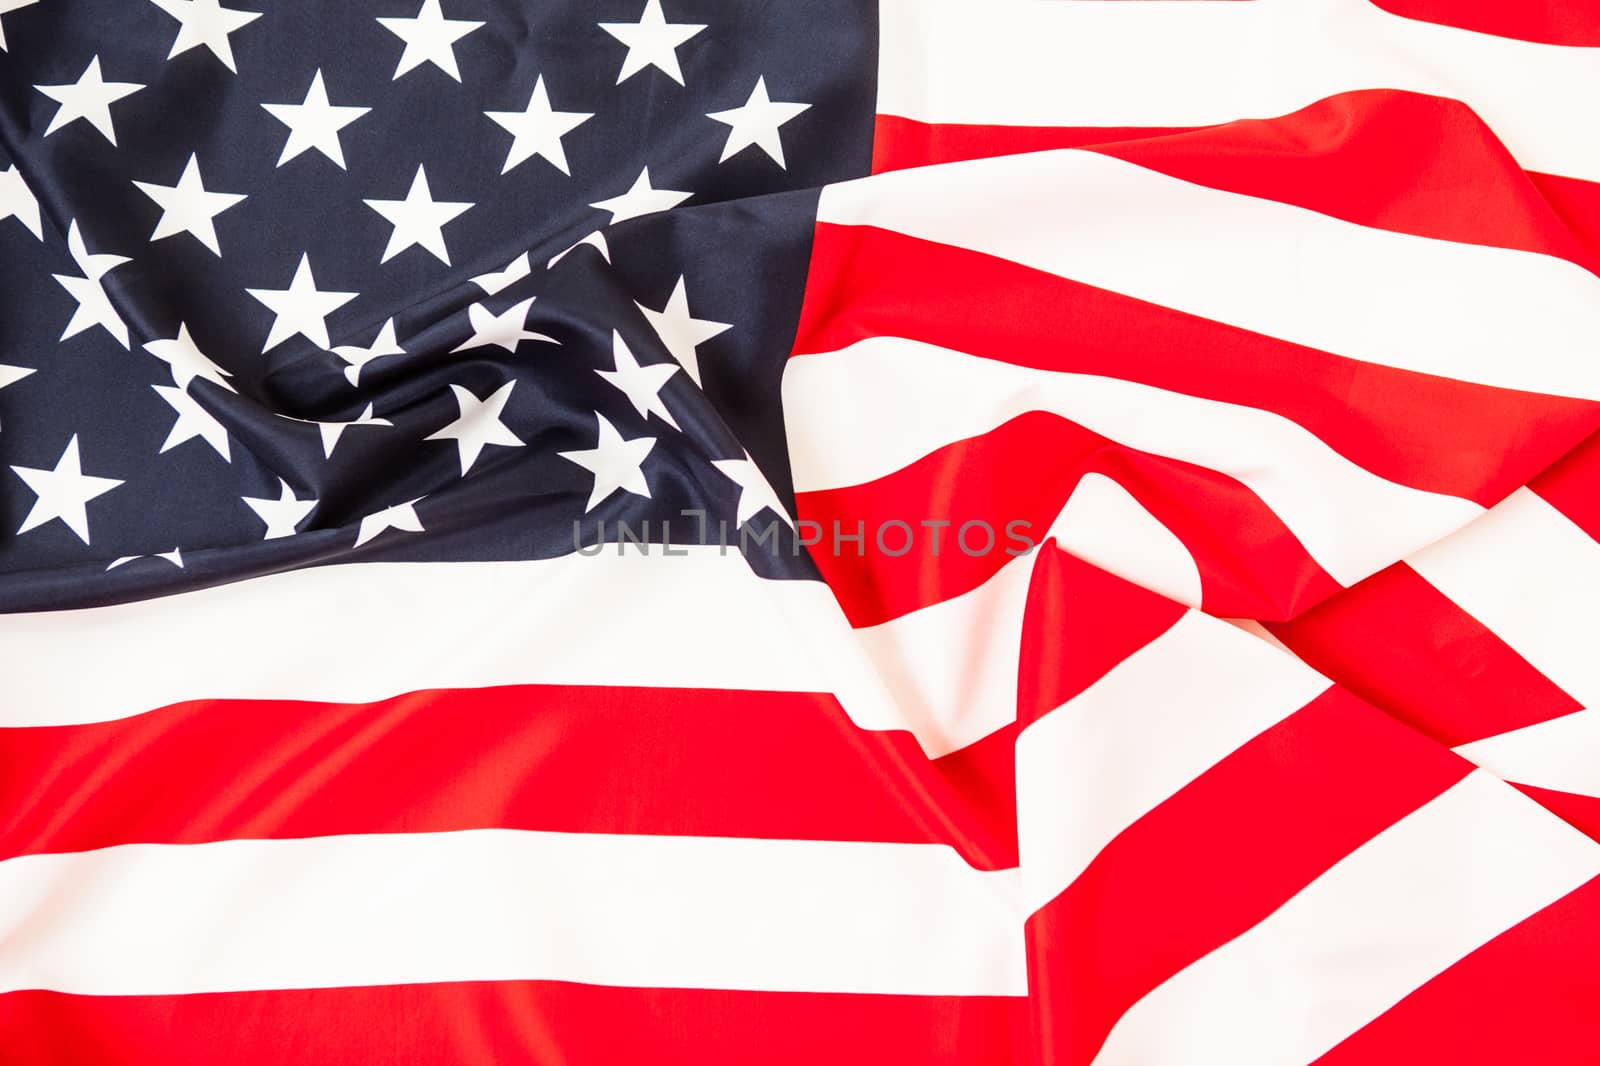 USA flag. Pure linen fabric flag carefully folded